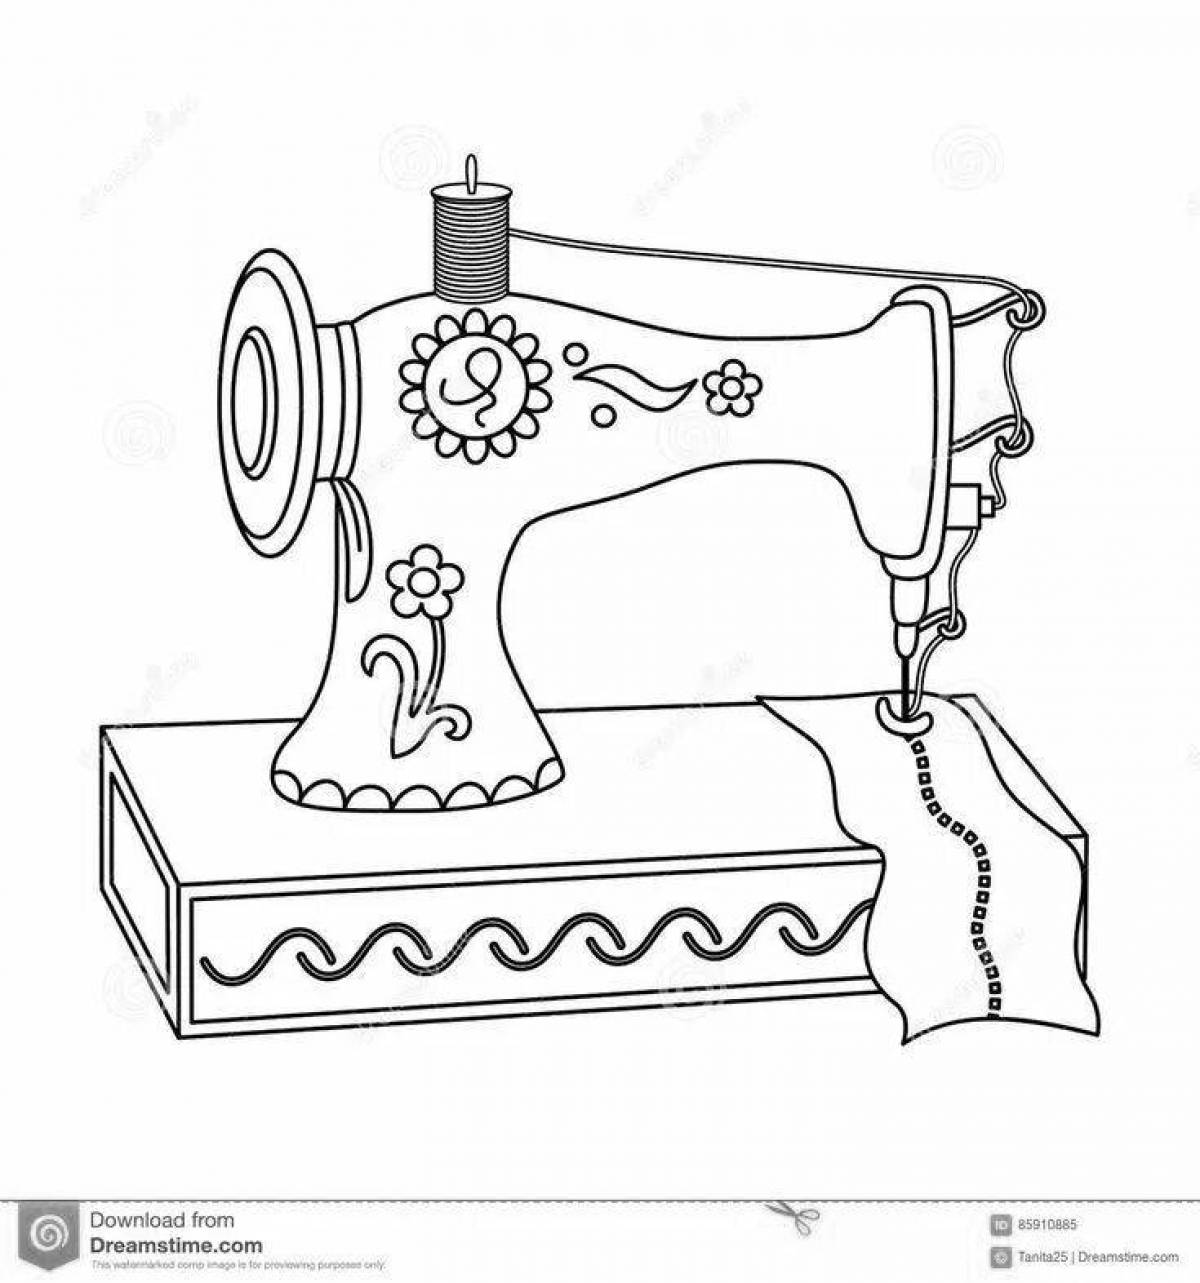 Coloring page joyful sewing machine